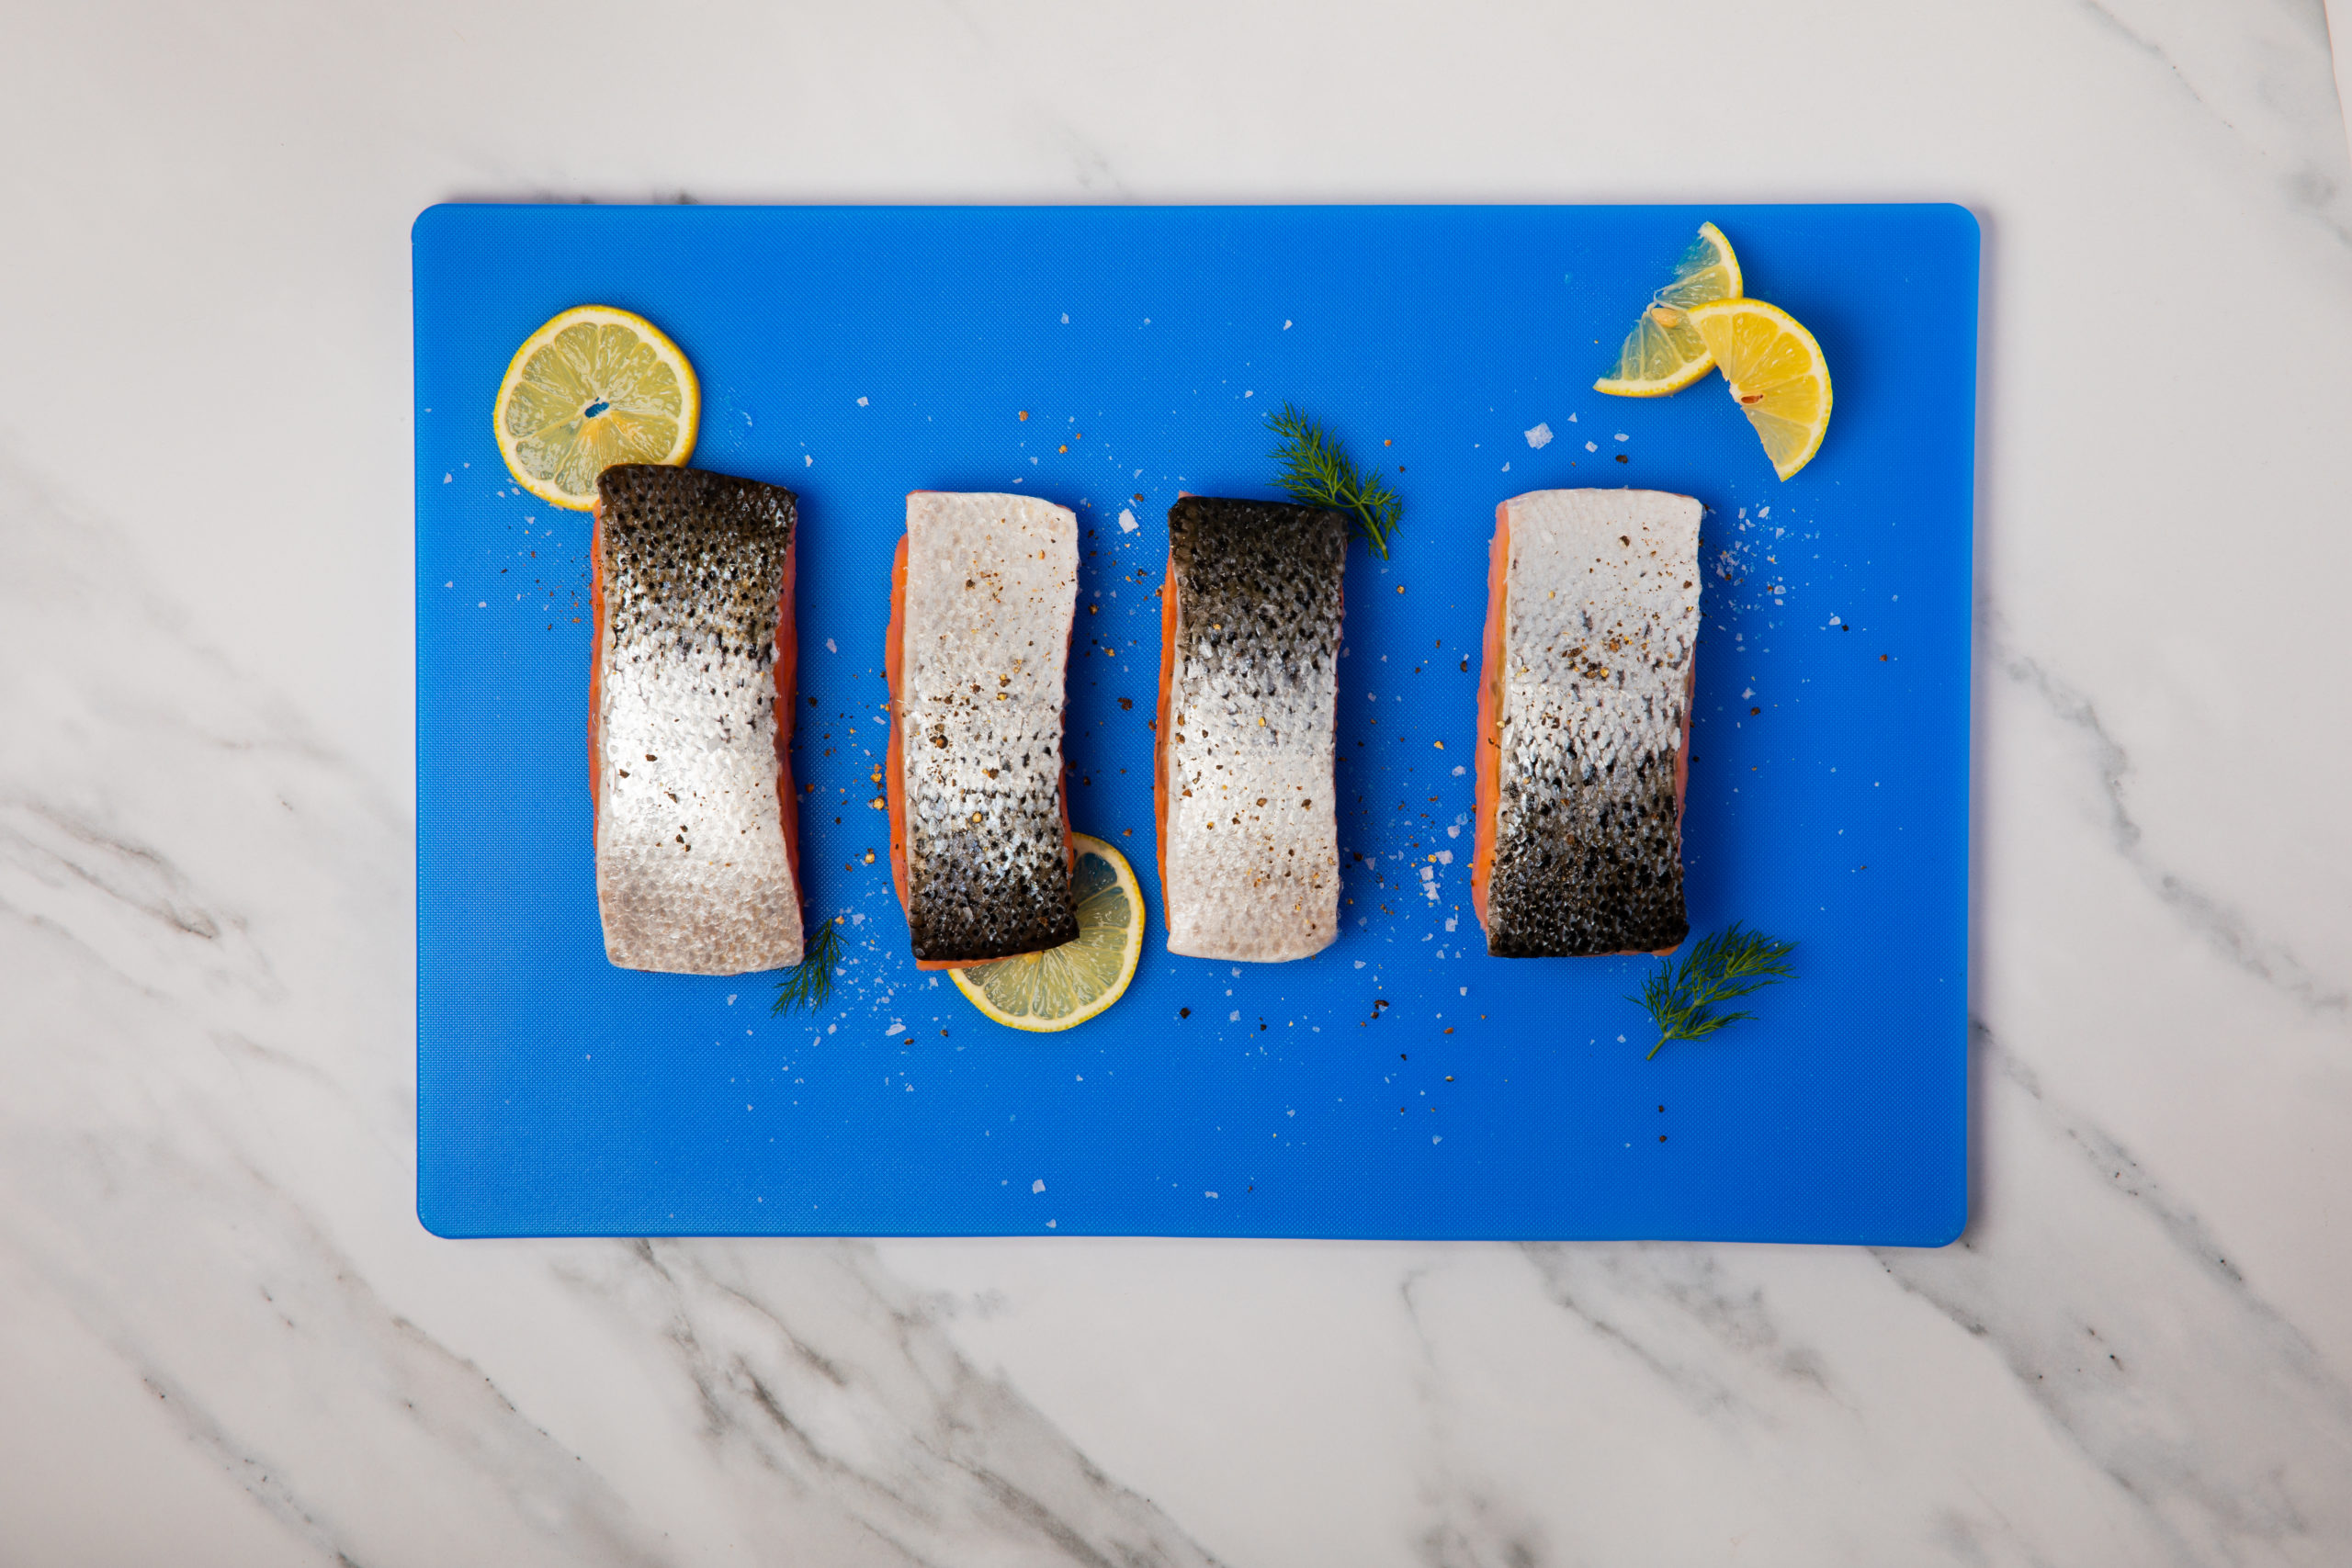 Healthy salmon preparation with lemons